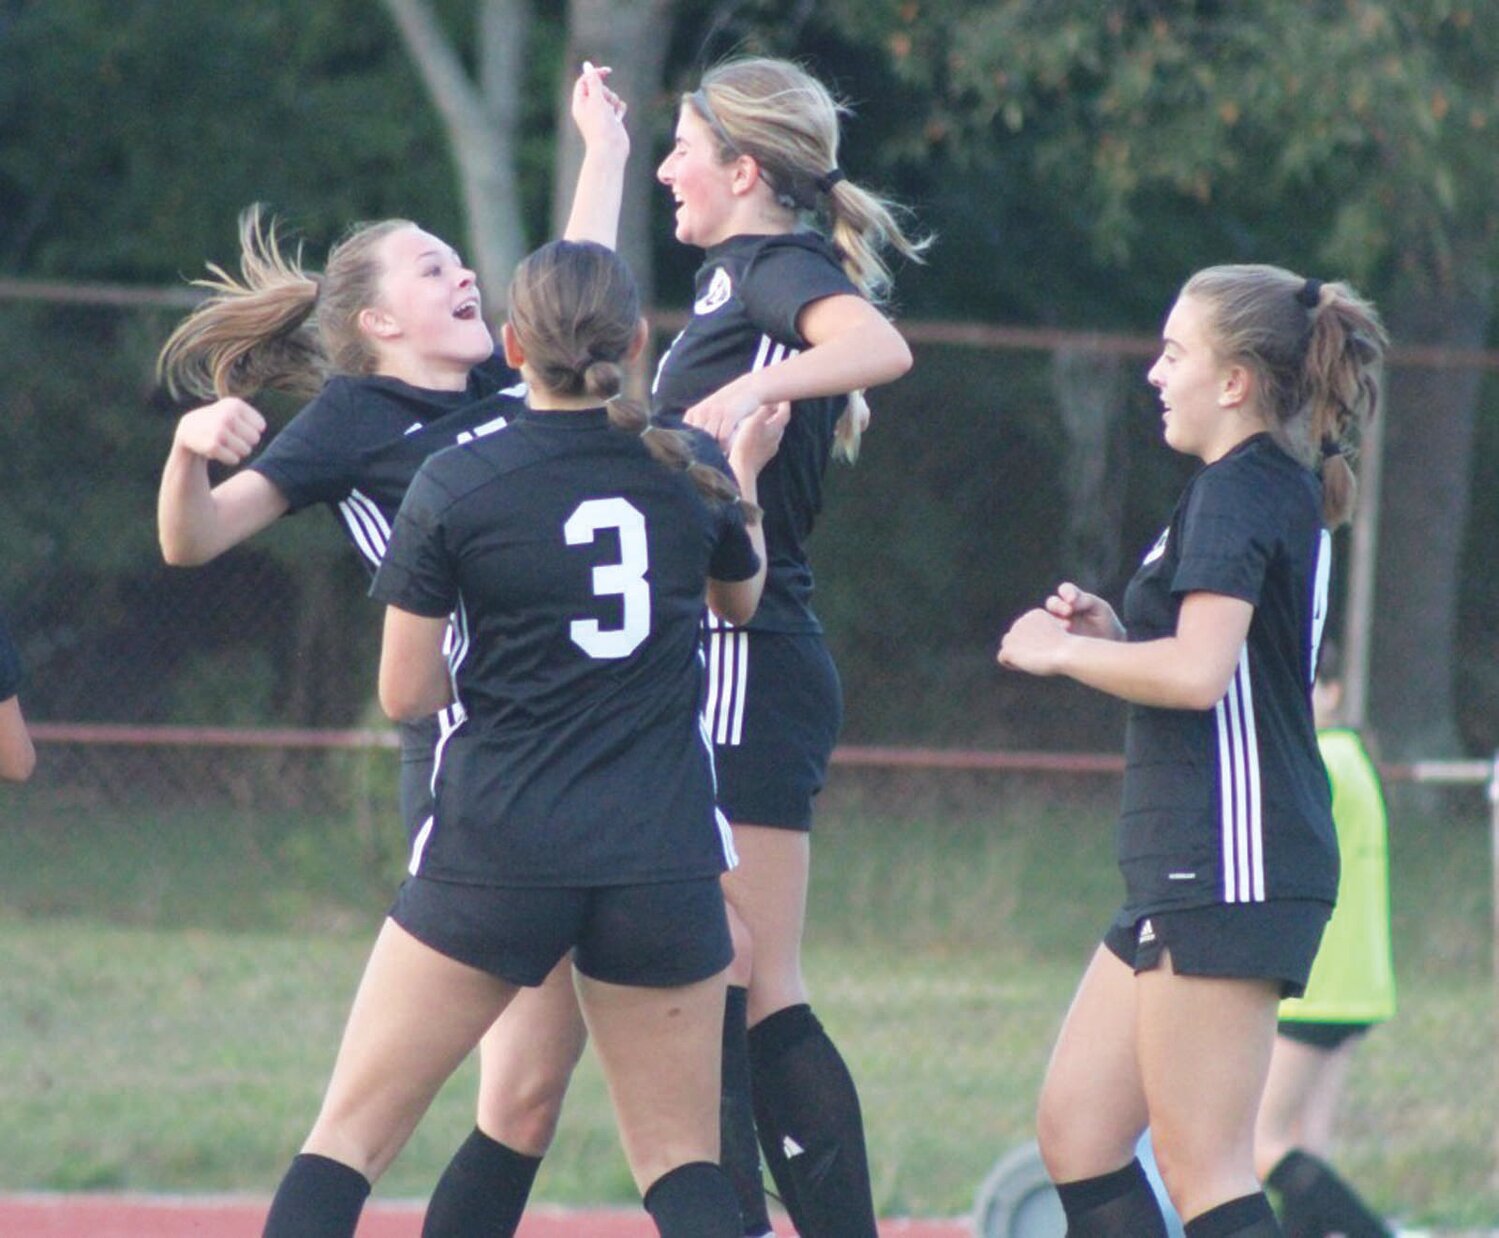 BIG WIN: Members of the Pilgrim girls soccer team celebrate after scoring a goal. (Photos by Alex Sponseller)